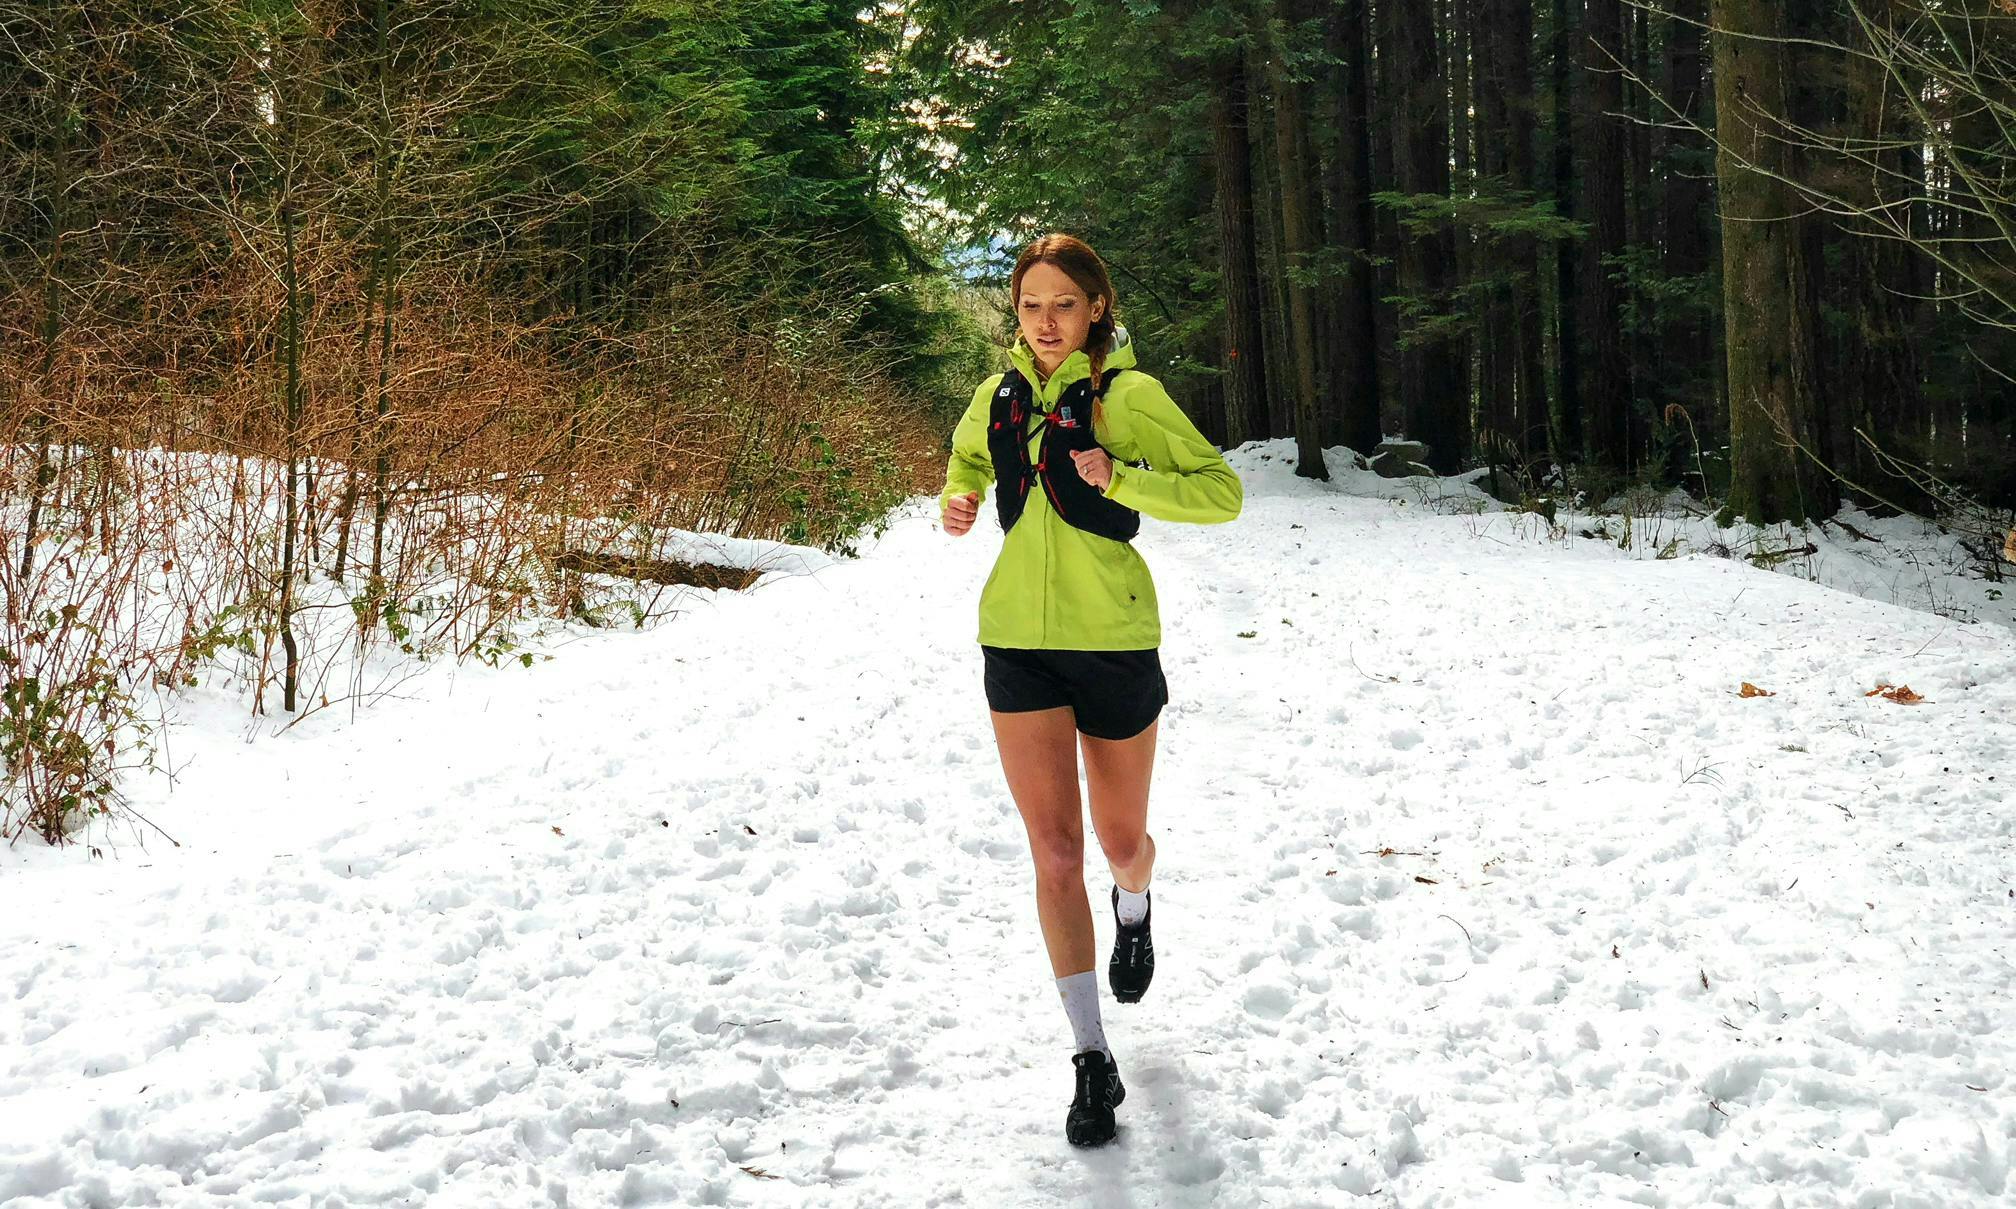 Mel Offner trail running on a snowy trail